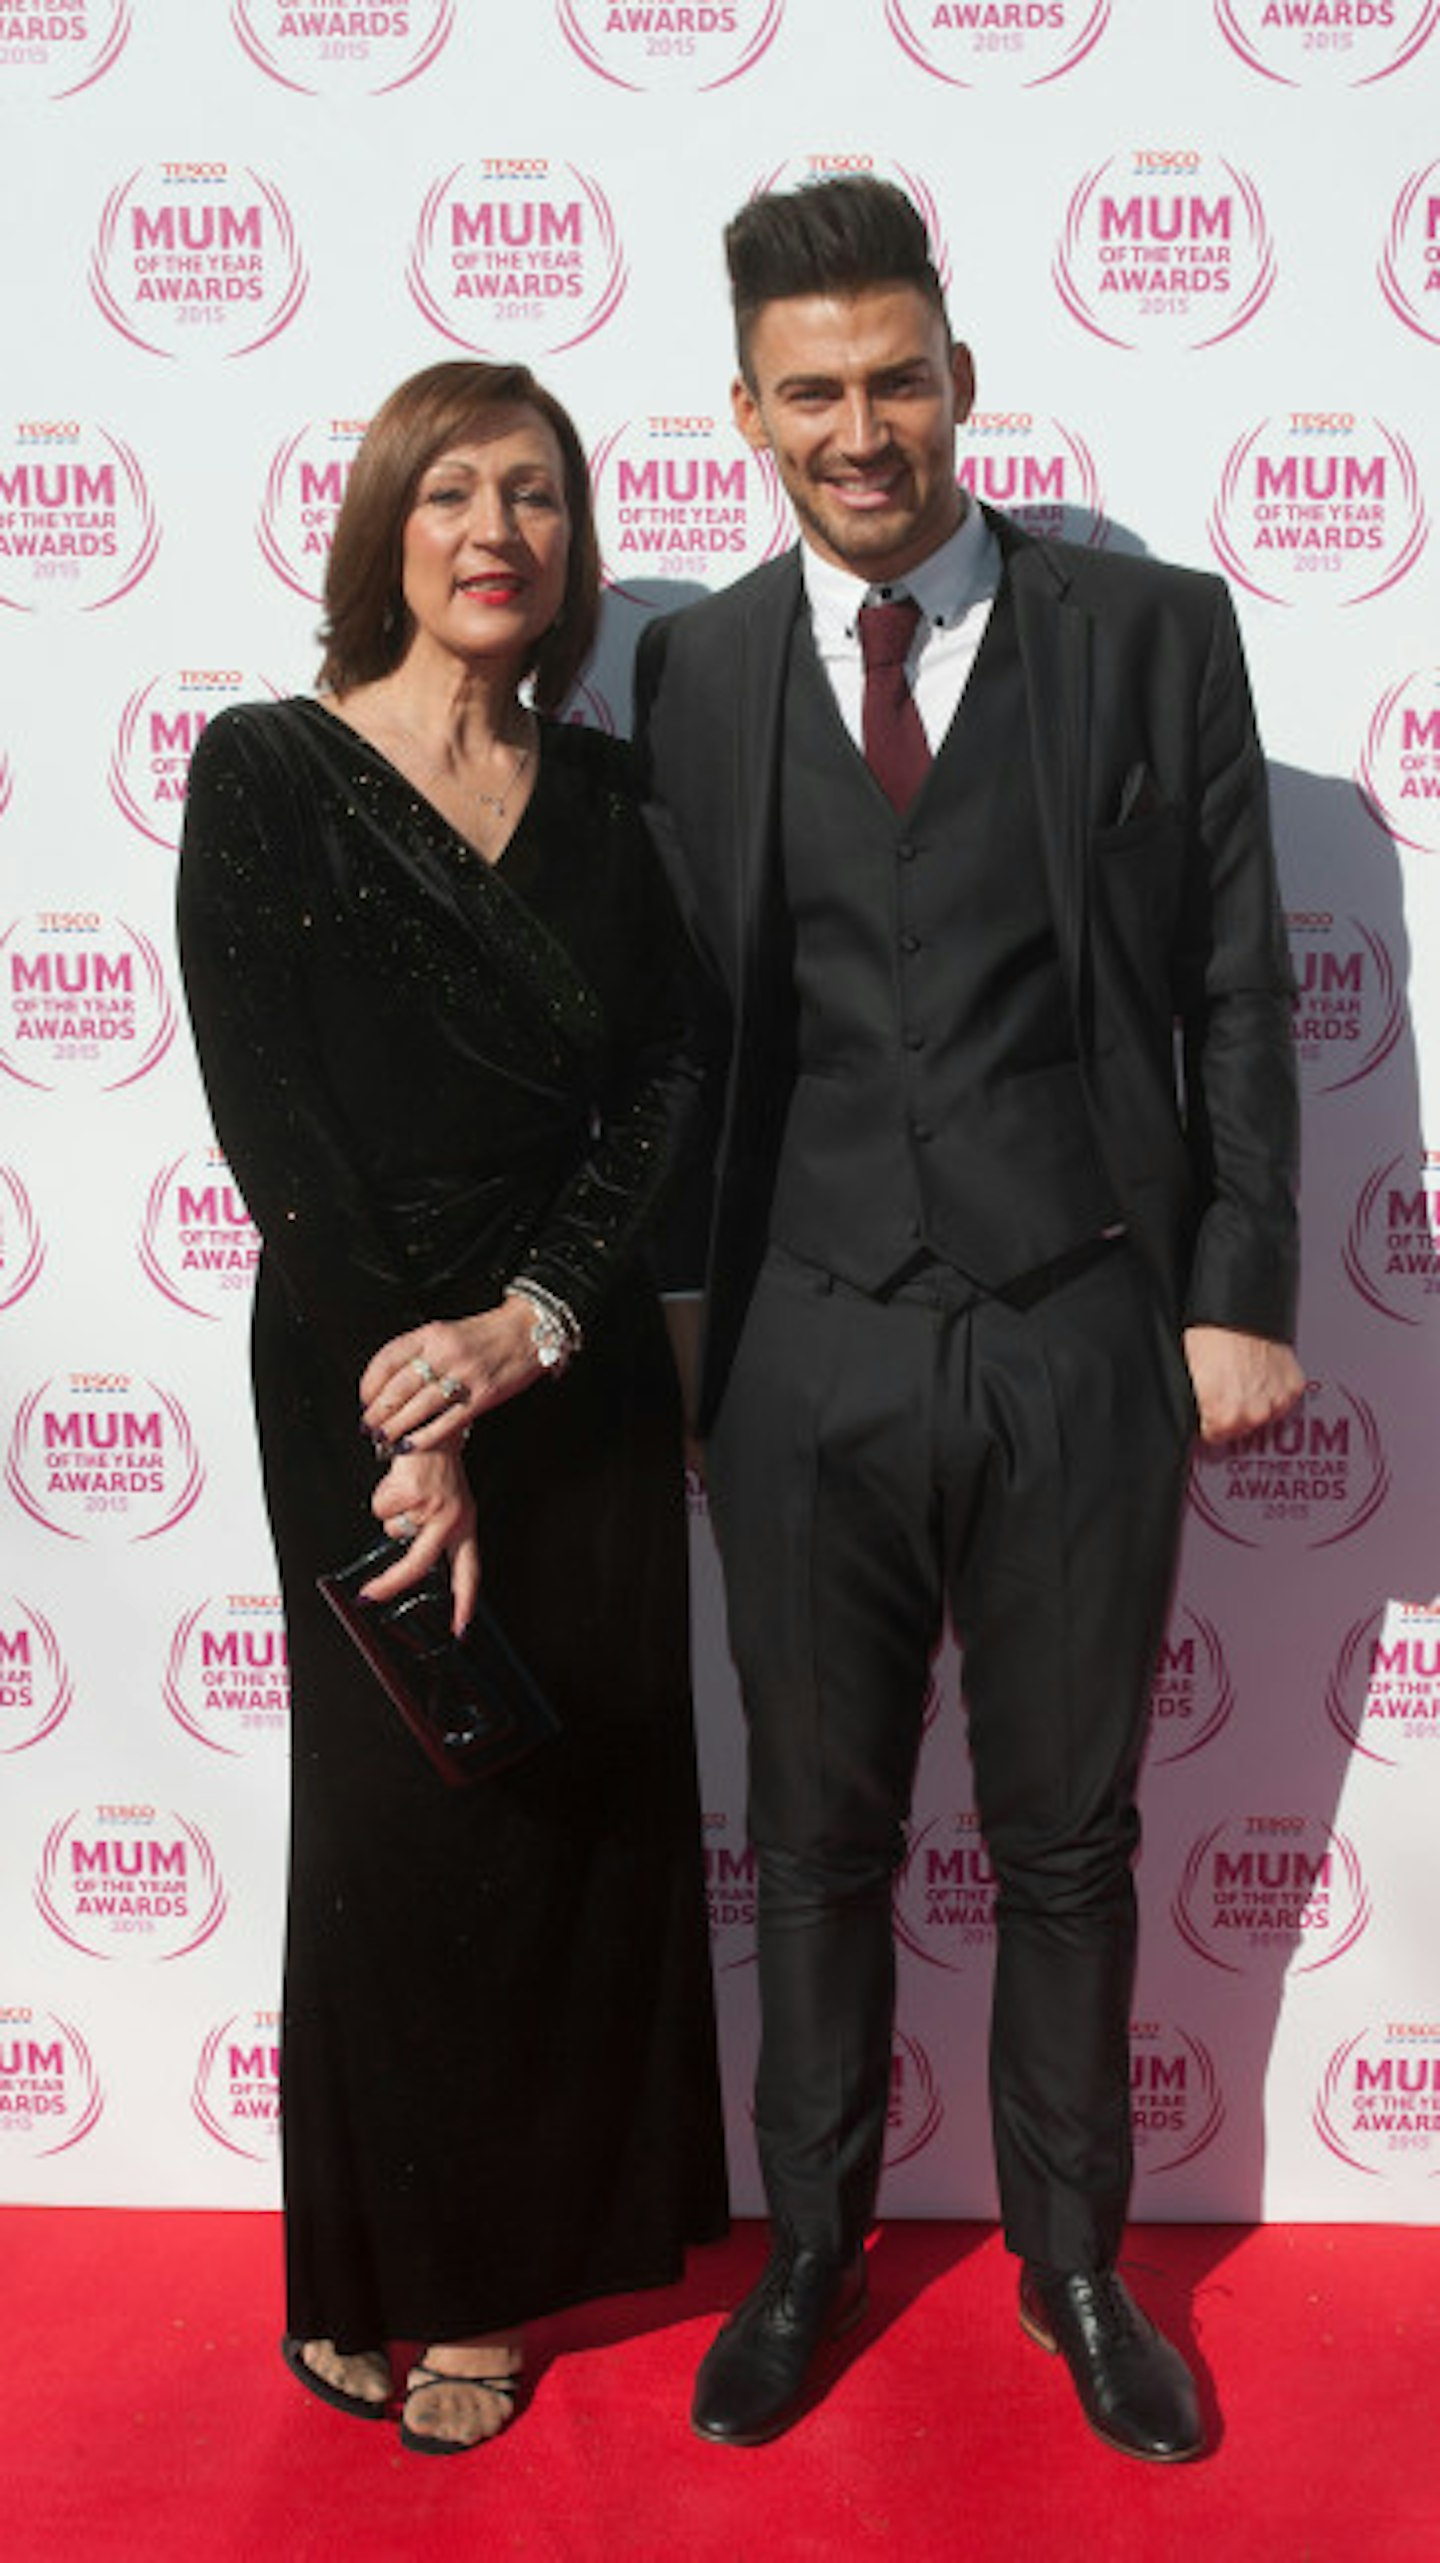 Jake with his mum at the awards